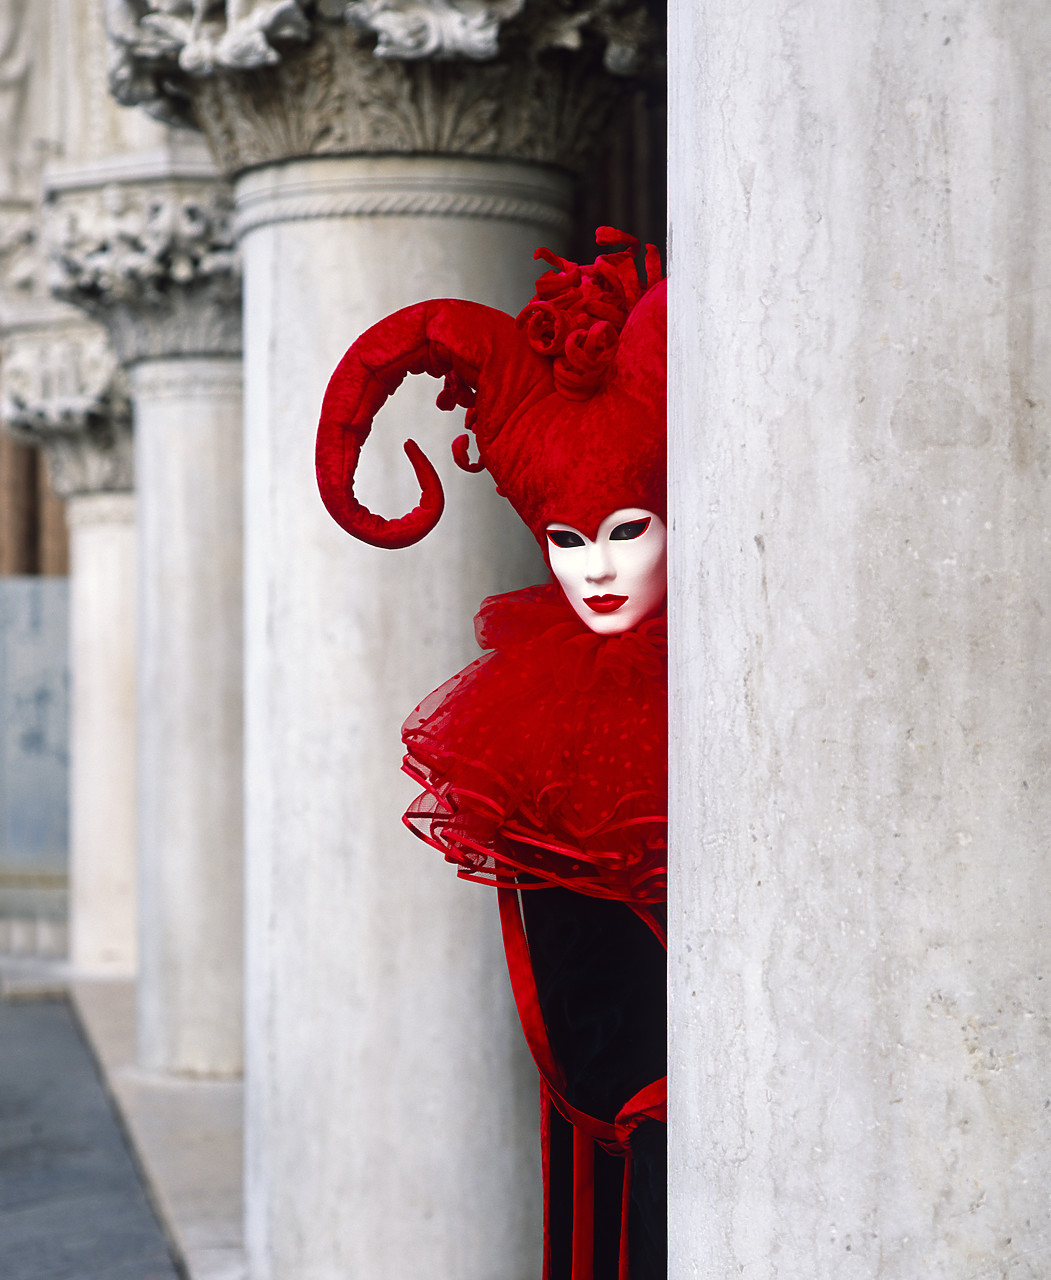 #990119-1 - Venice Carnivale Mask, Venice, Italy